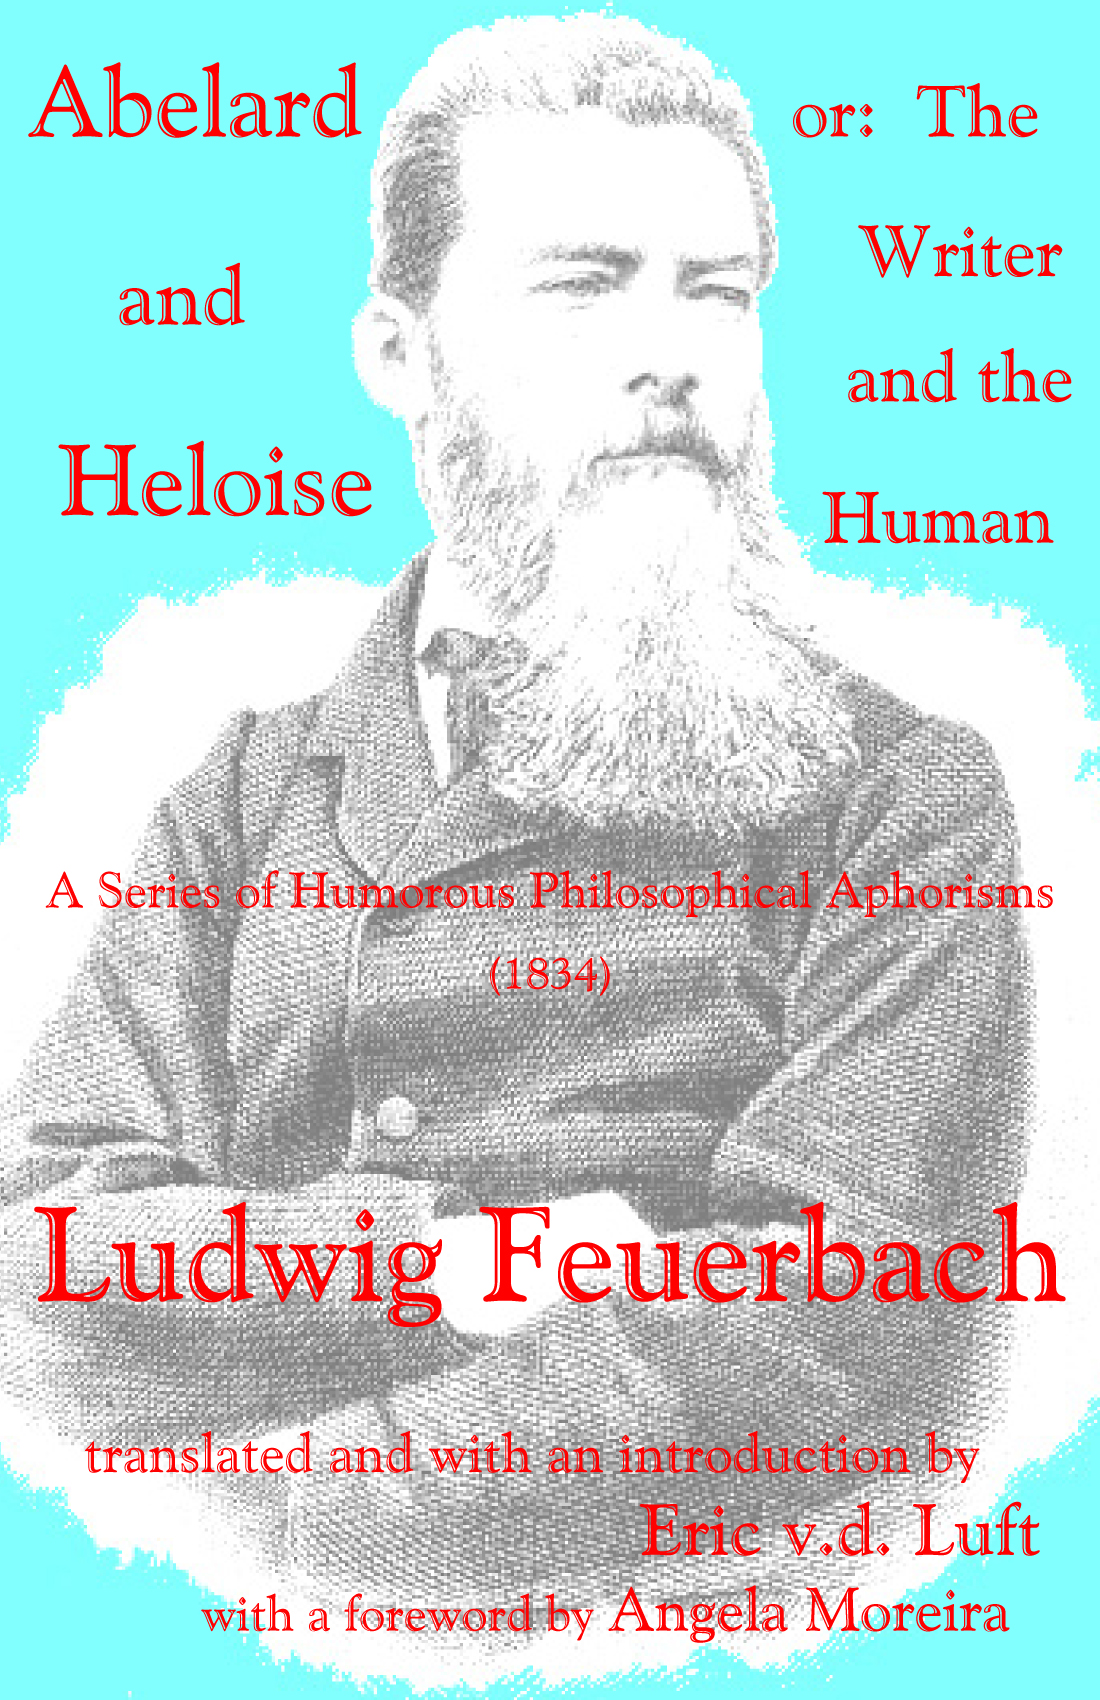 Abelard and Heloise by Ludwig Feuerbach